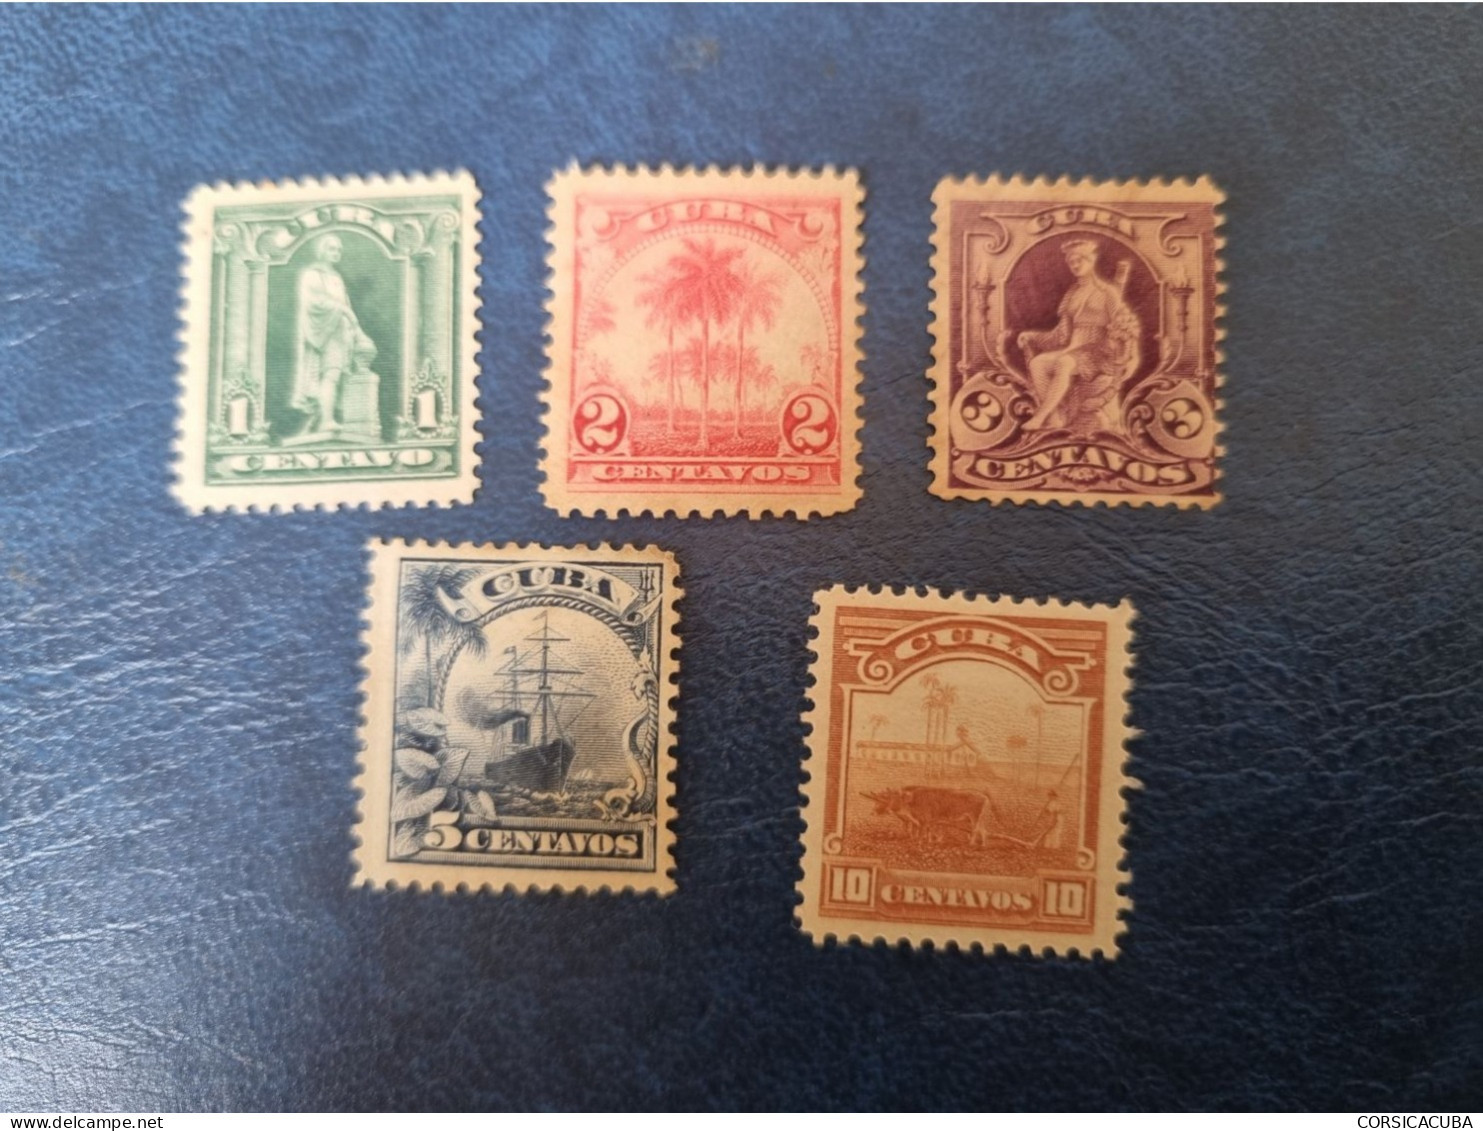 CUBA  NEUF  ALEGORIAS  CUBANAS  1899/1902  //  PARFAIT  ETAT  //  1er  CHOIX  // - Unused Stamps